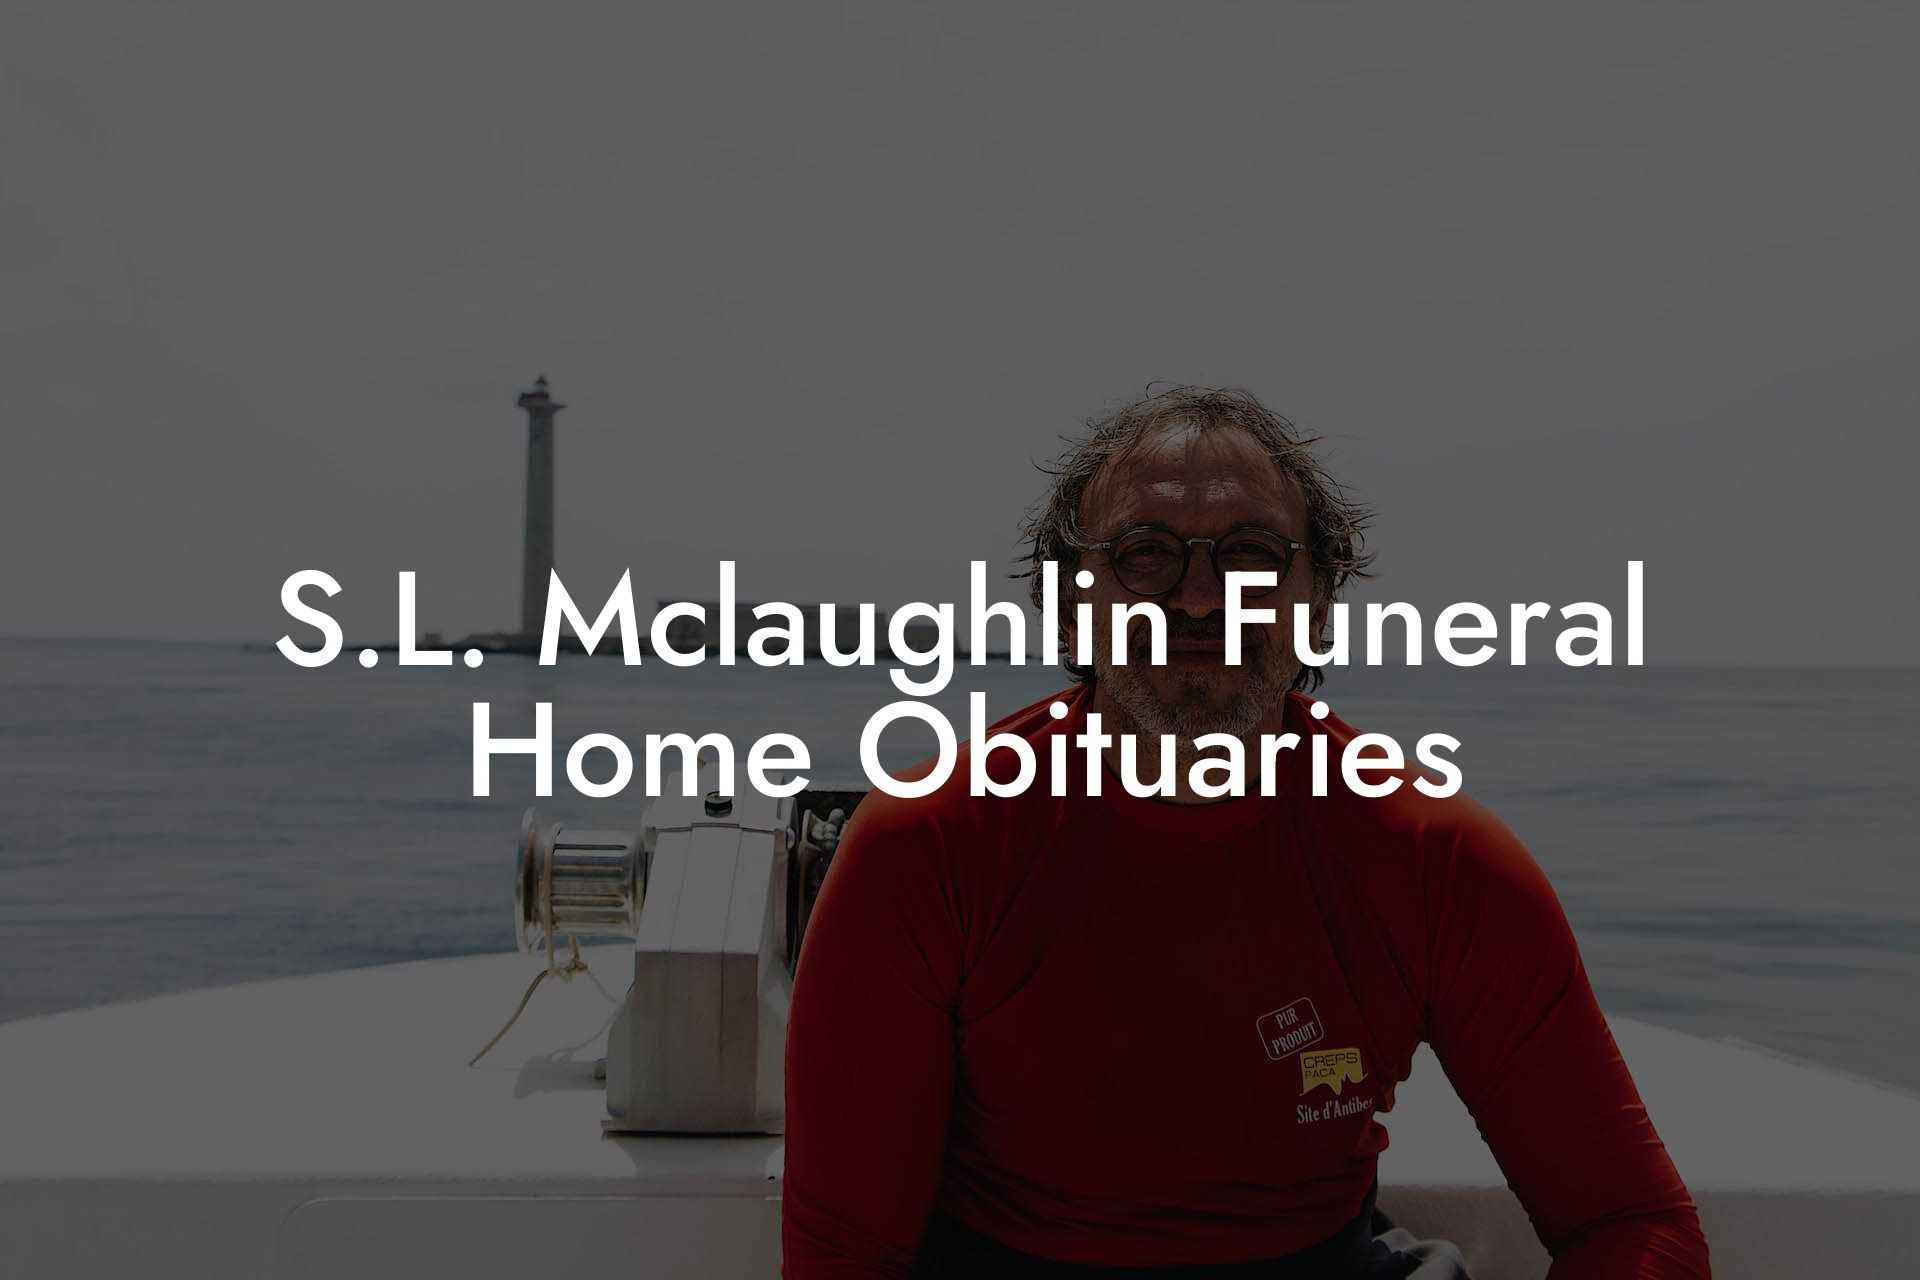 S.L. Mclaughlin Funeral Home Obituaries